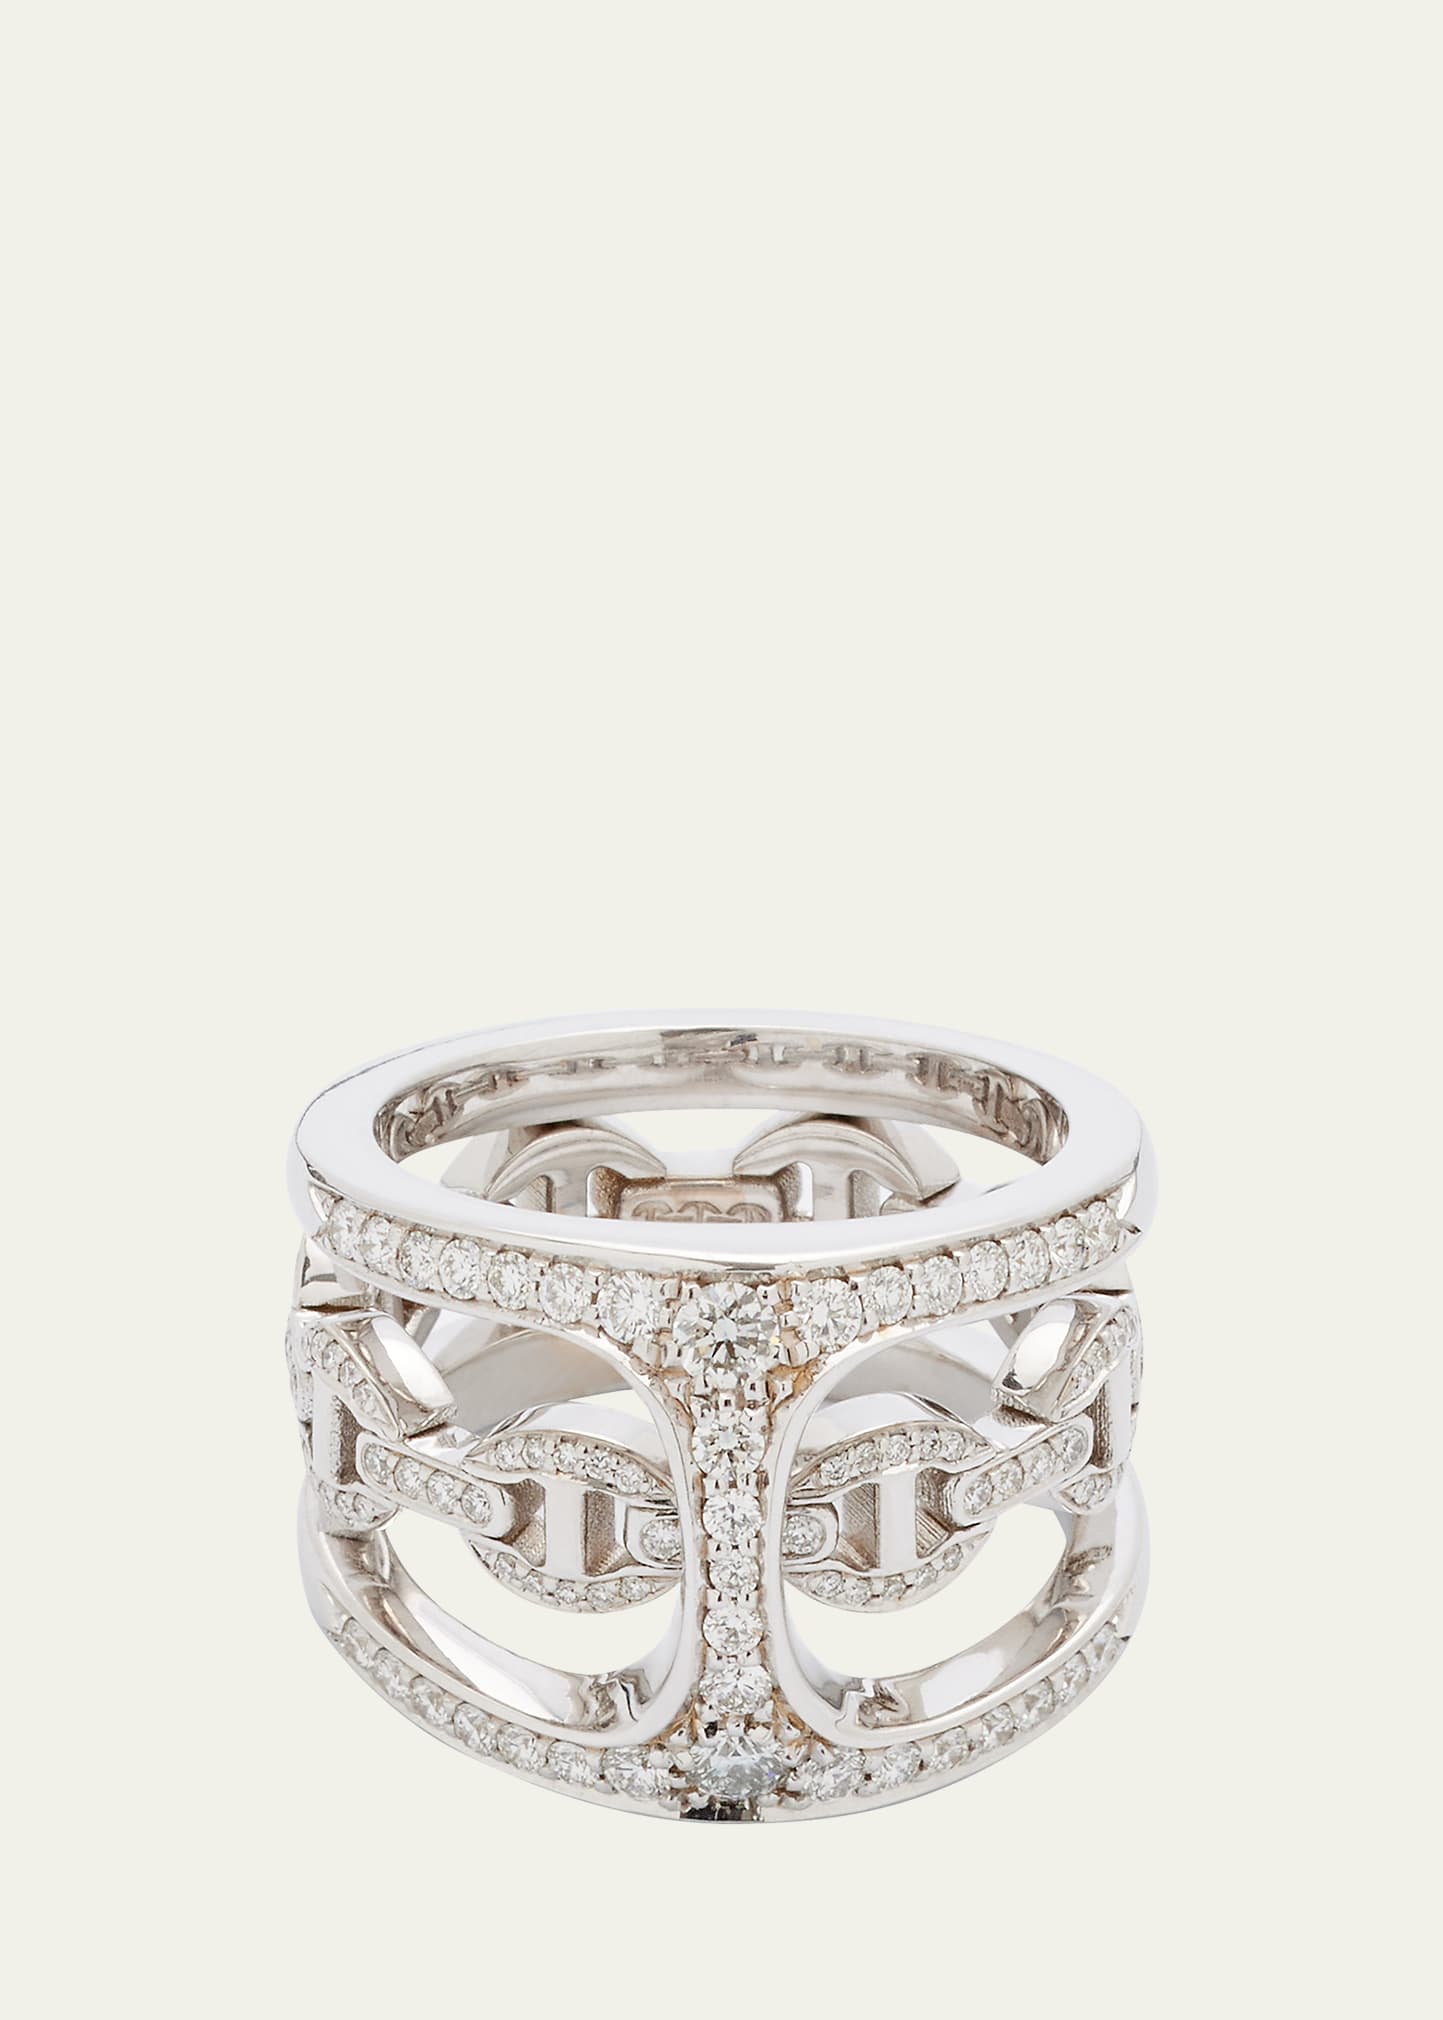 Hoorsenbuhs Dame Phantom Clique Antiquated Ring in 18K White Gold